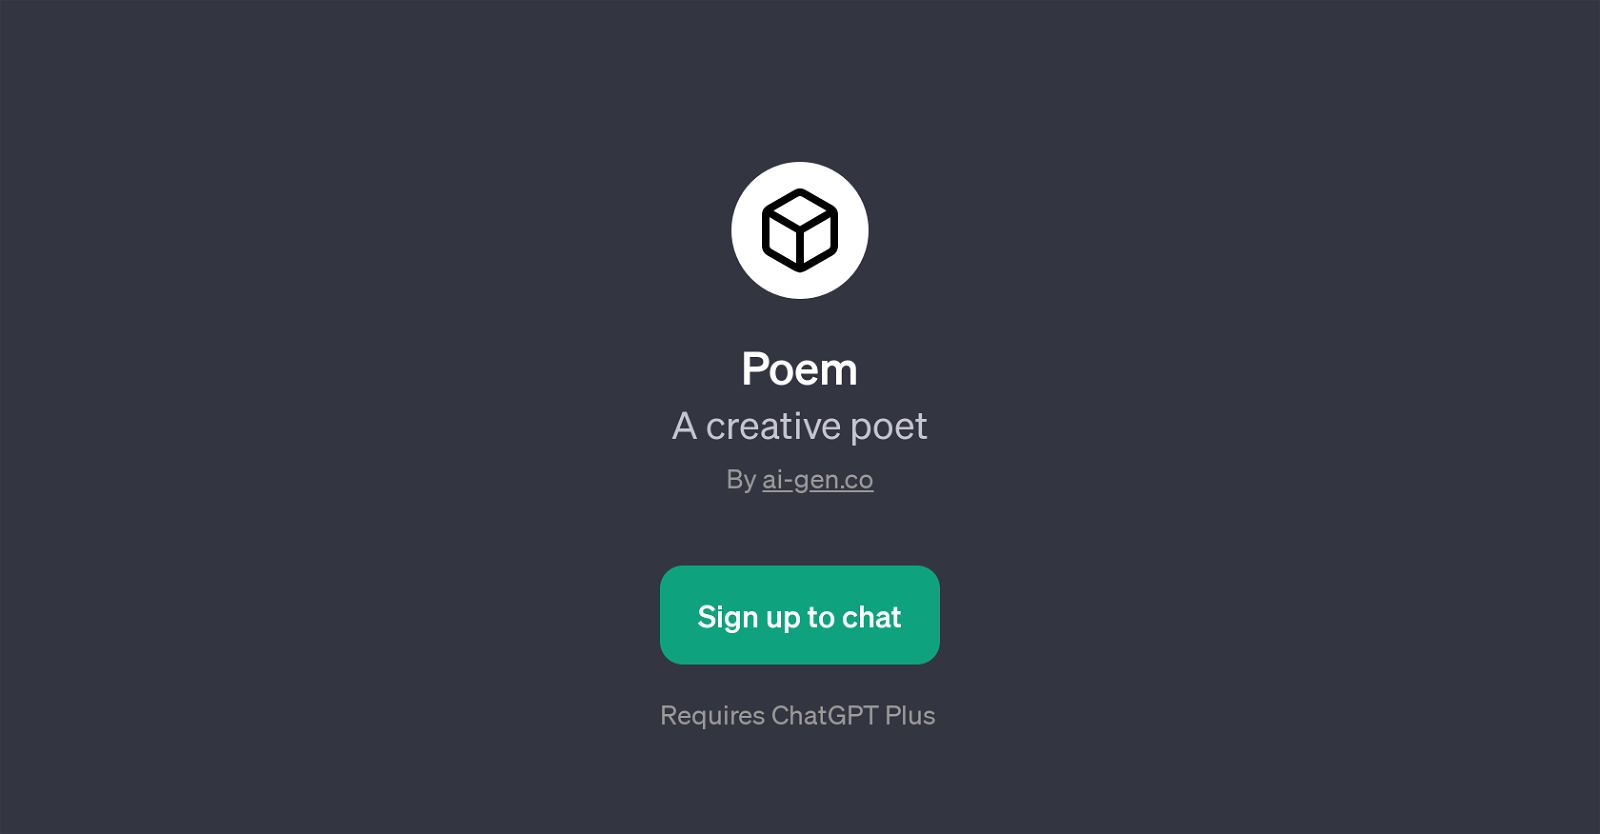 Poem website